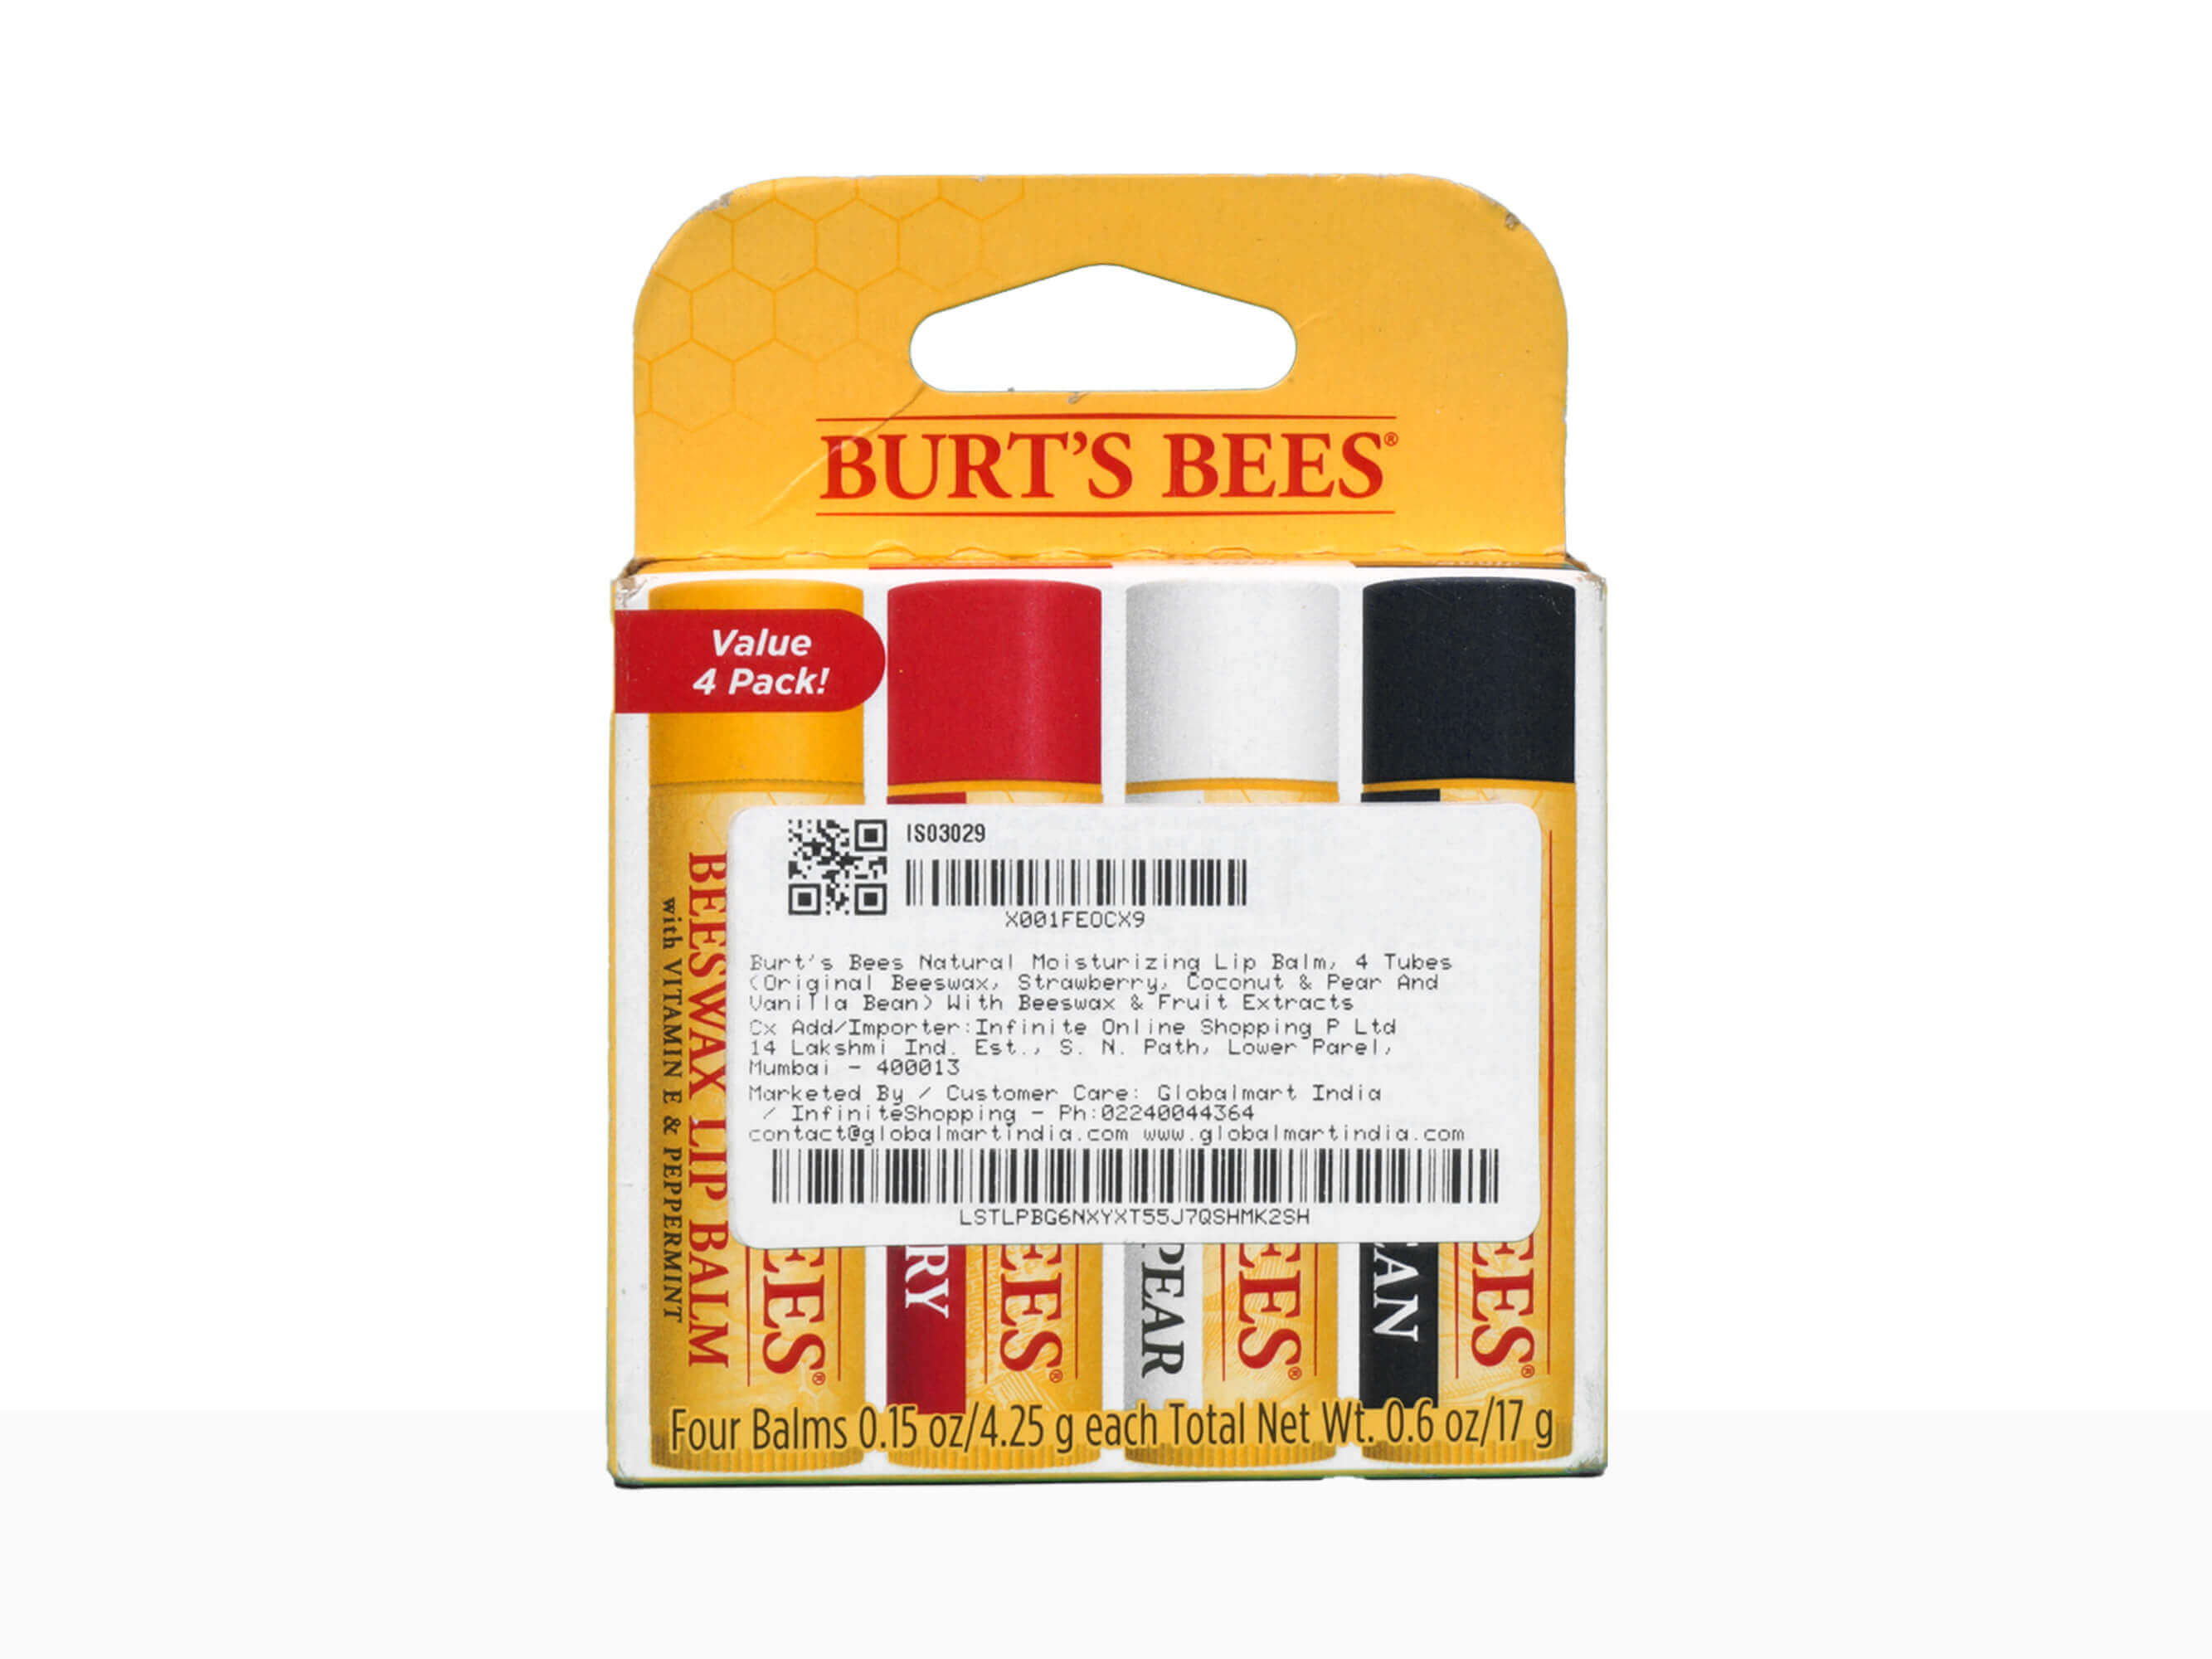 Burt's Bees 100% Natural Moisturizing Lip Balm, Original Beeswax with  Vitamin E and Peppermint Oil, 1 x 4.25g 